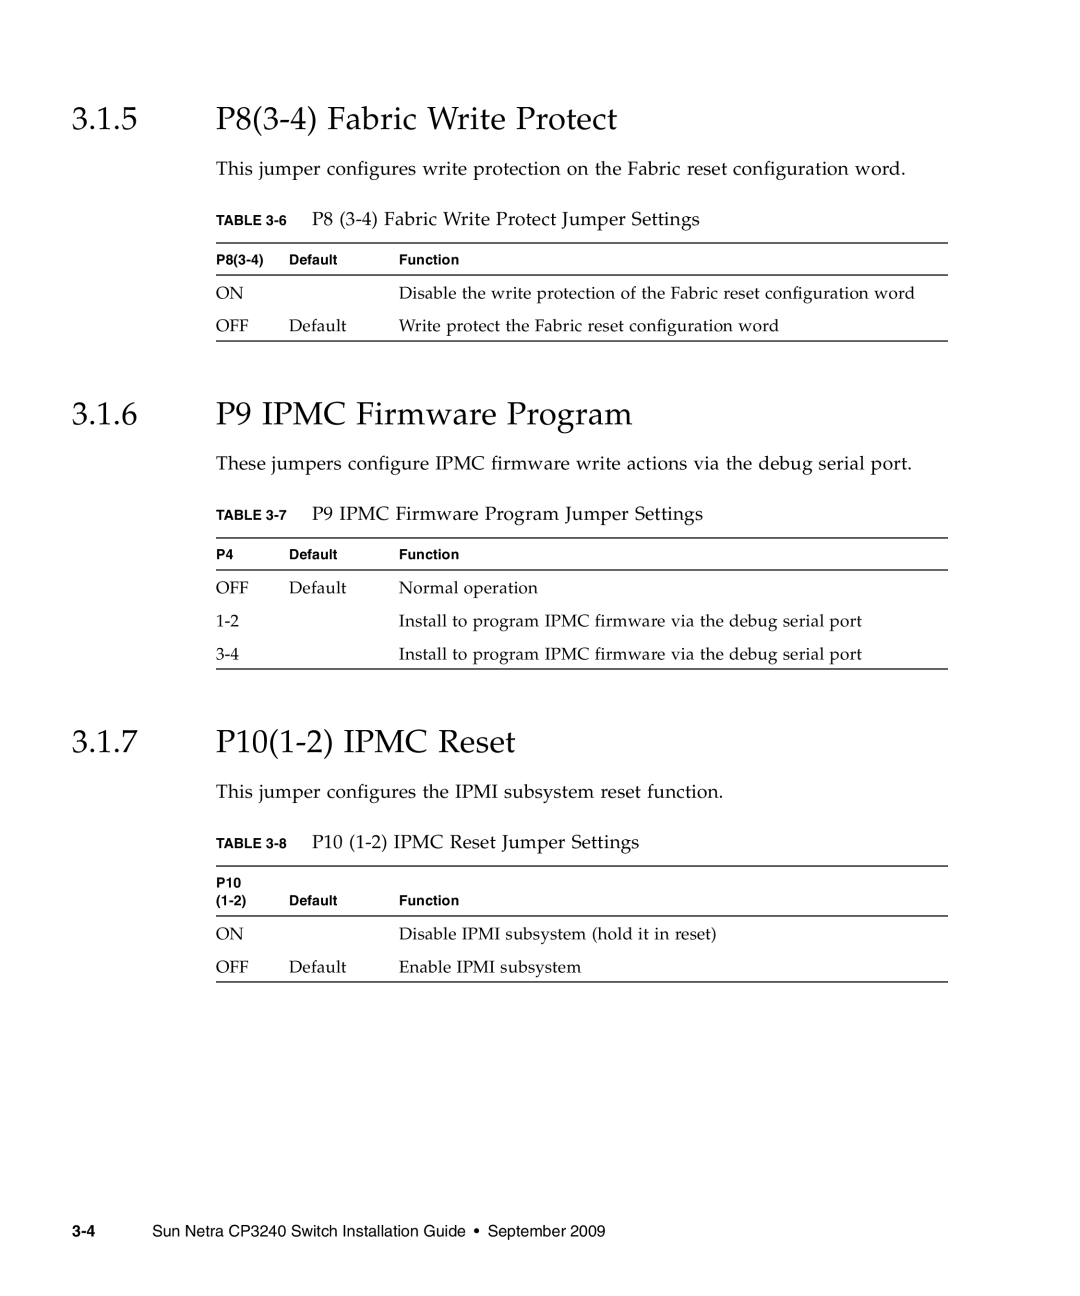 Sun Microsystems CP3240 manual 3.1.5 P83-4 Fabric Write Protect, 3.1.6 P9 IPMC Firmware Program, 3.1.7 P101-2 IPMC Reset 